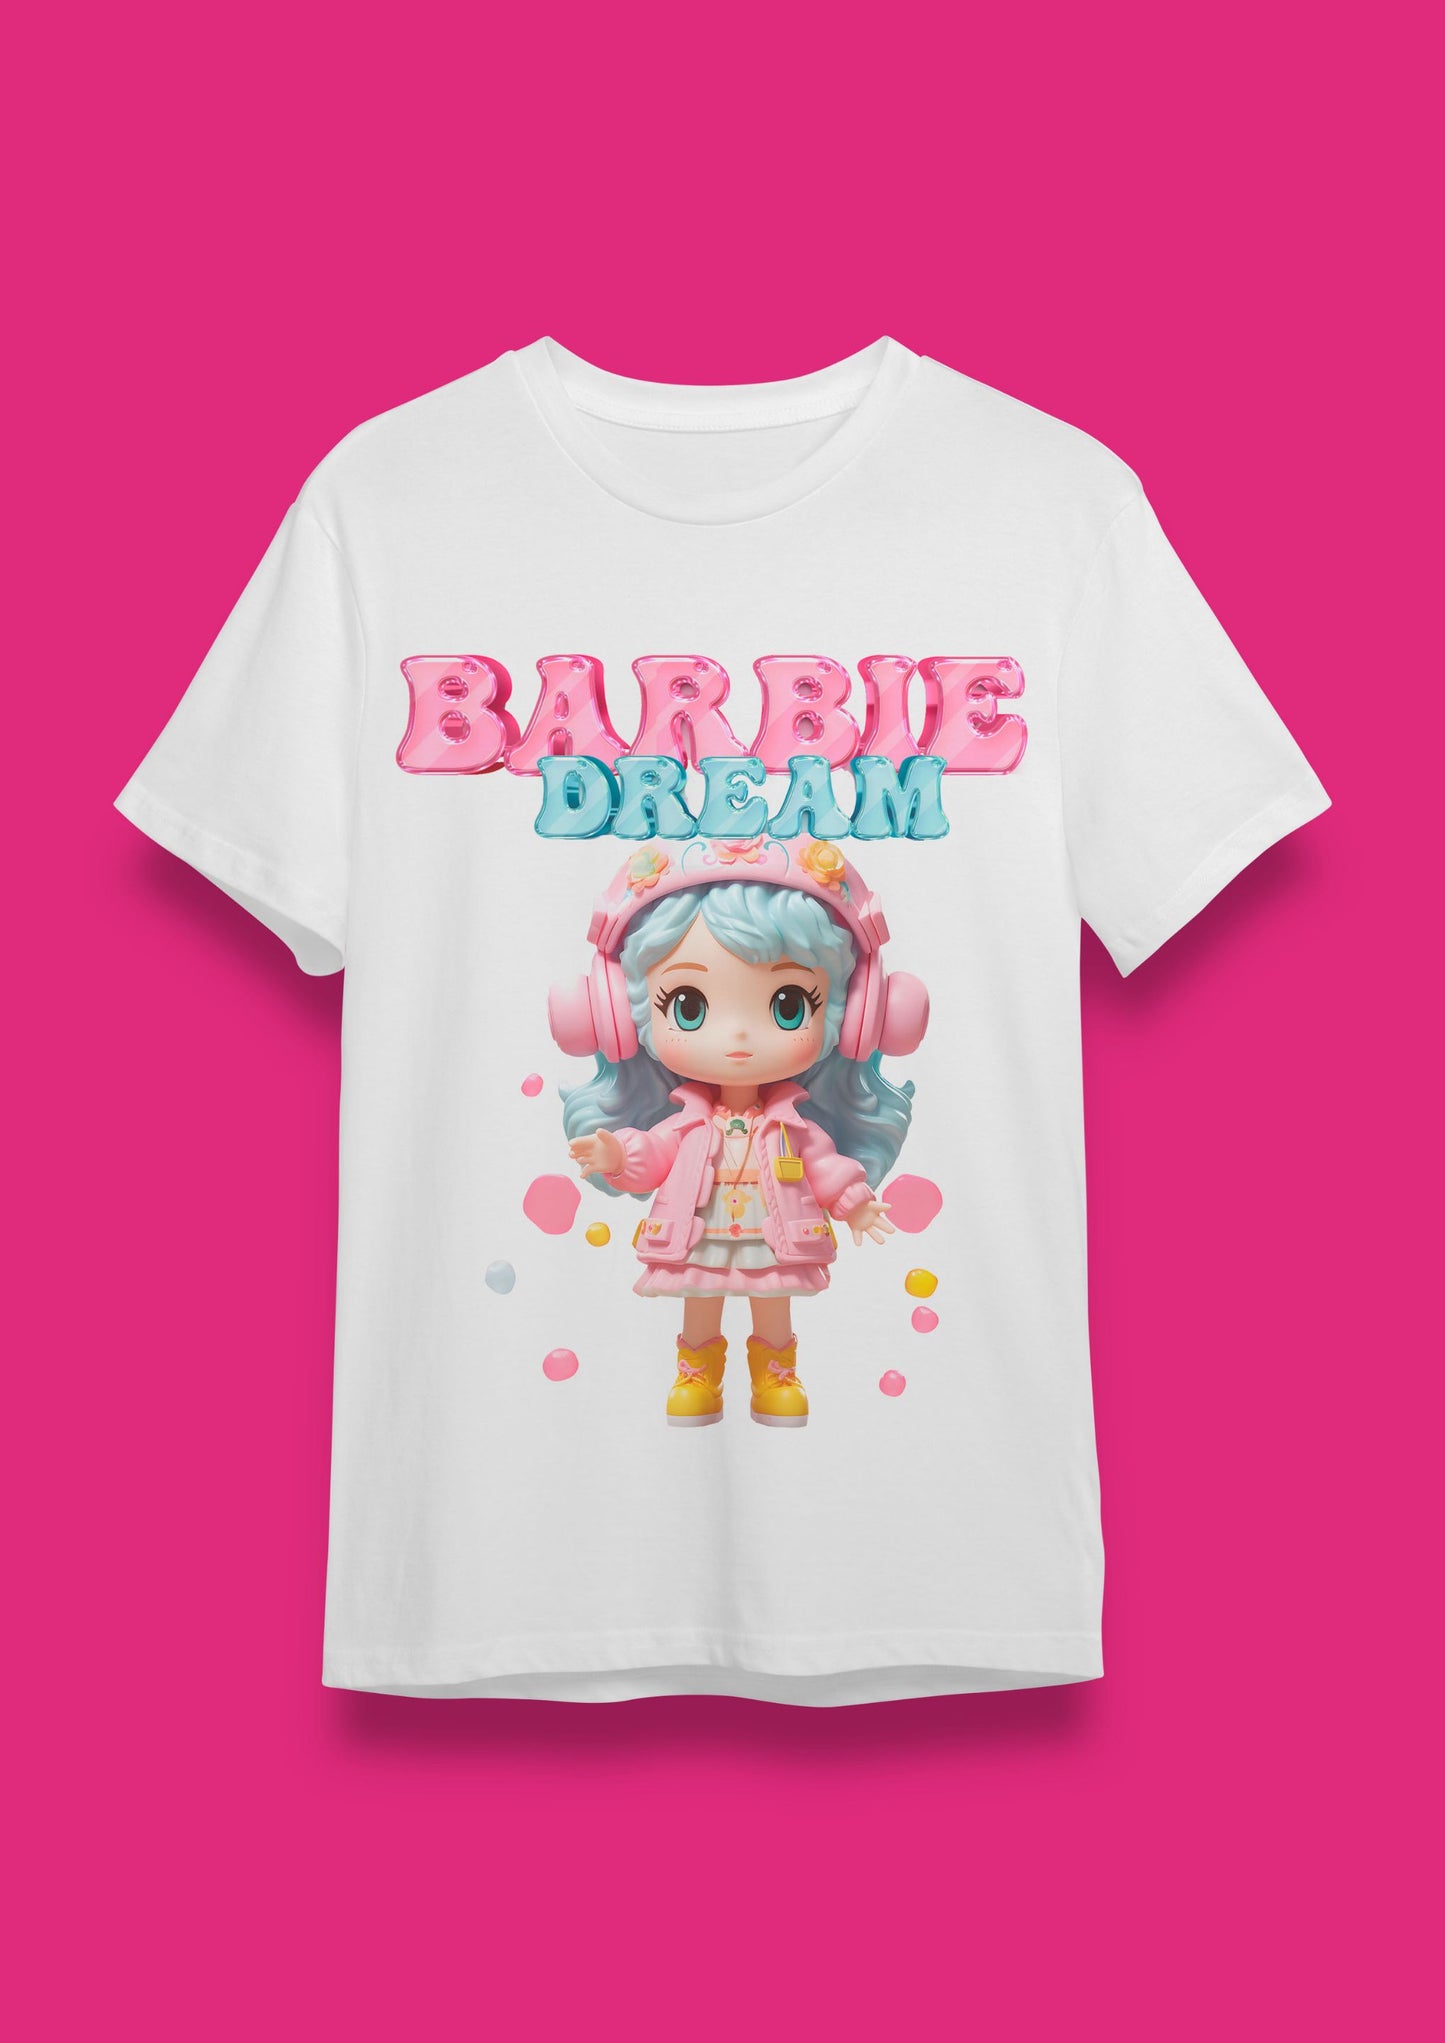 Barbie dream Regular Fit T-shirt for Women